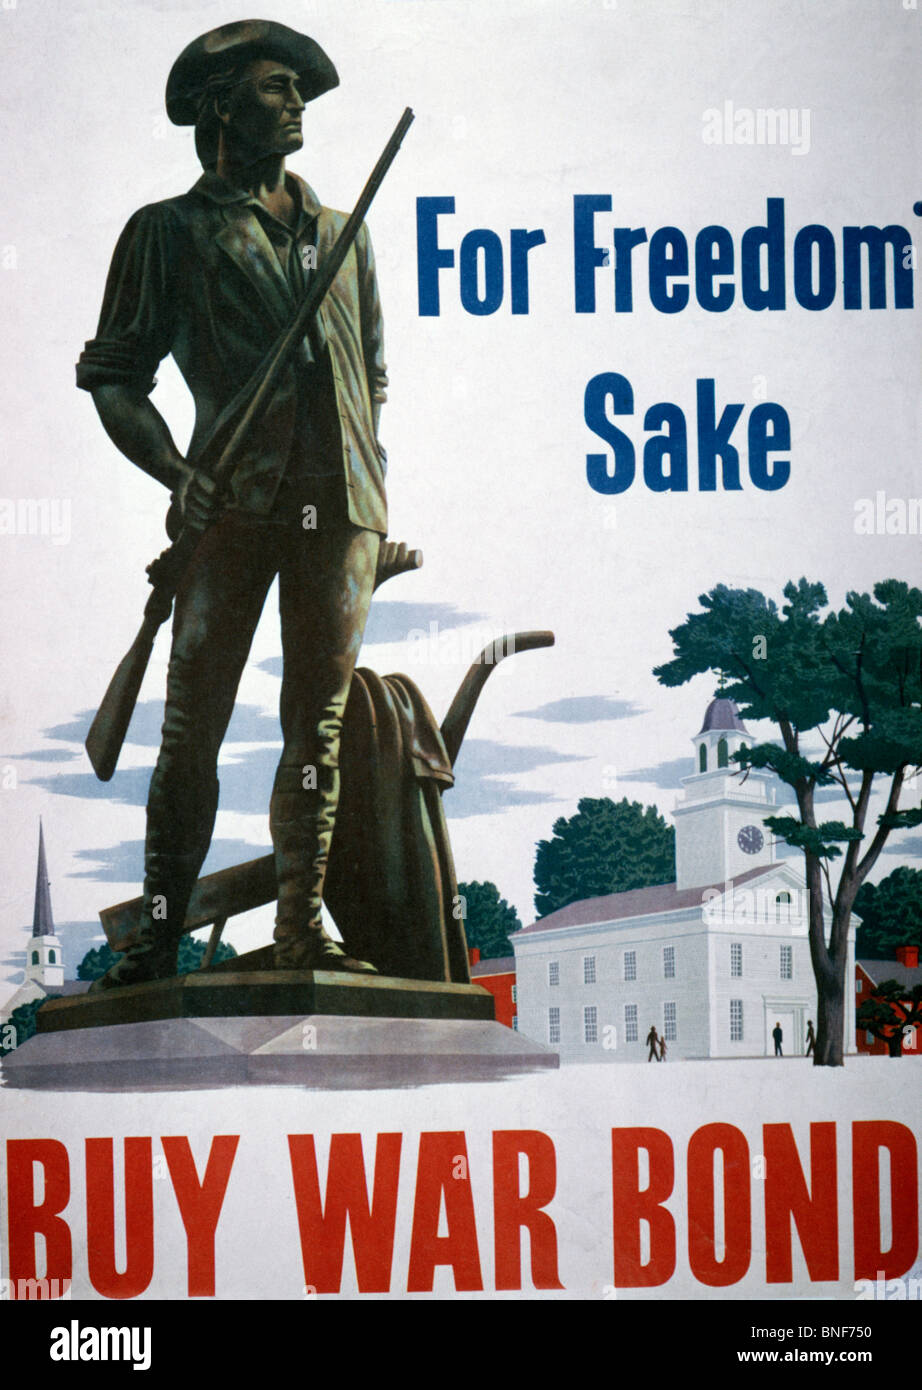 World War II - For Freedom's Sake, Buy War Bonds, Poster Stock Photo